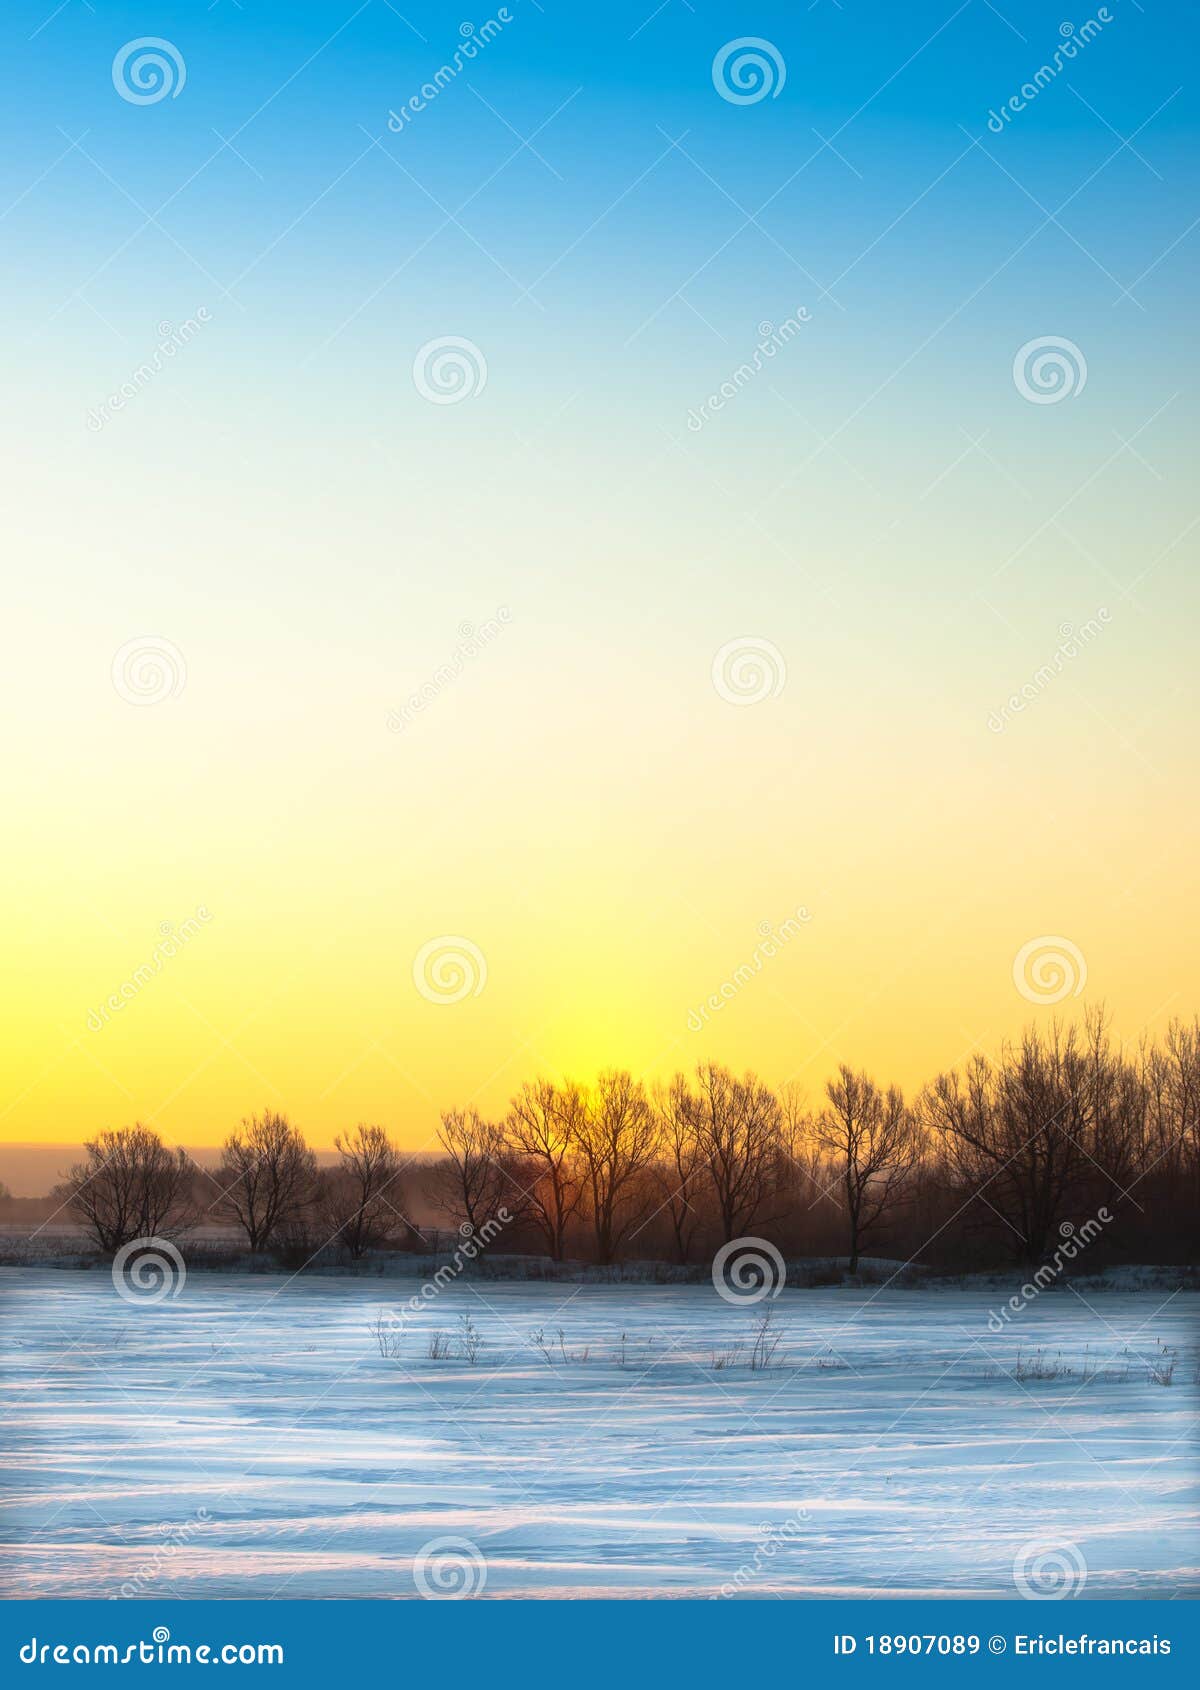 winter fields at sunrise